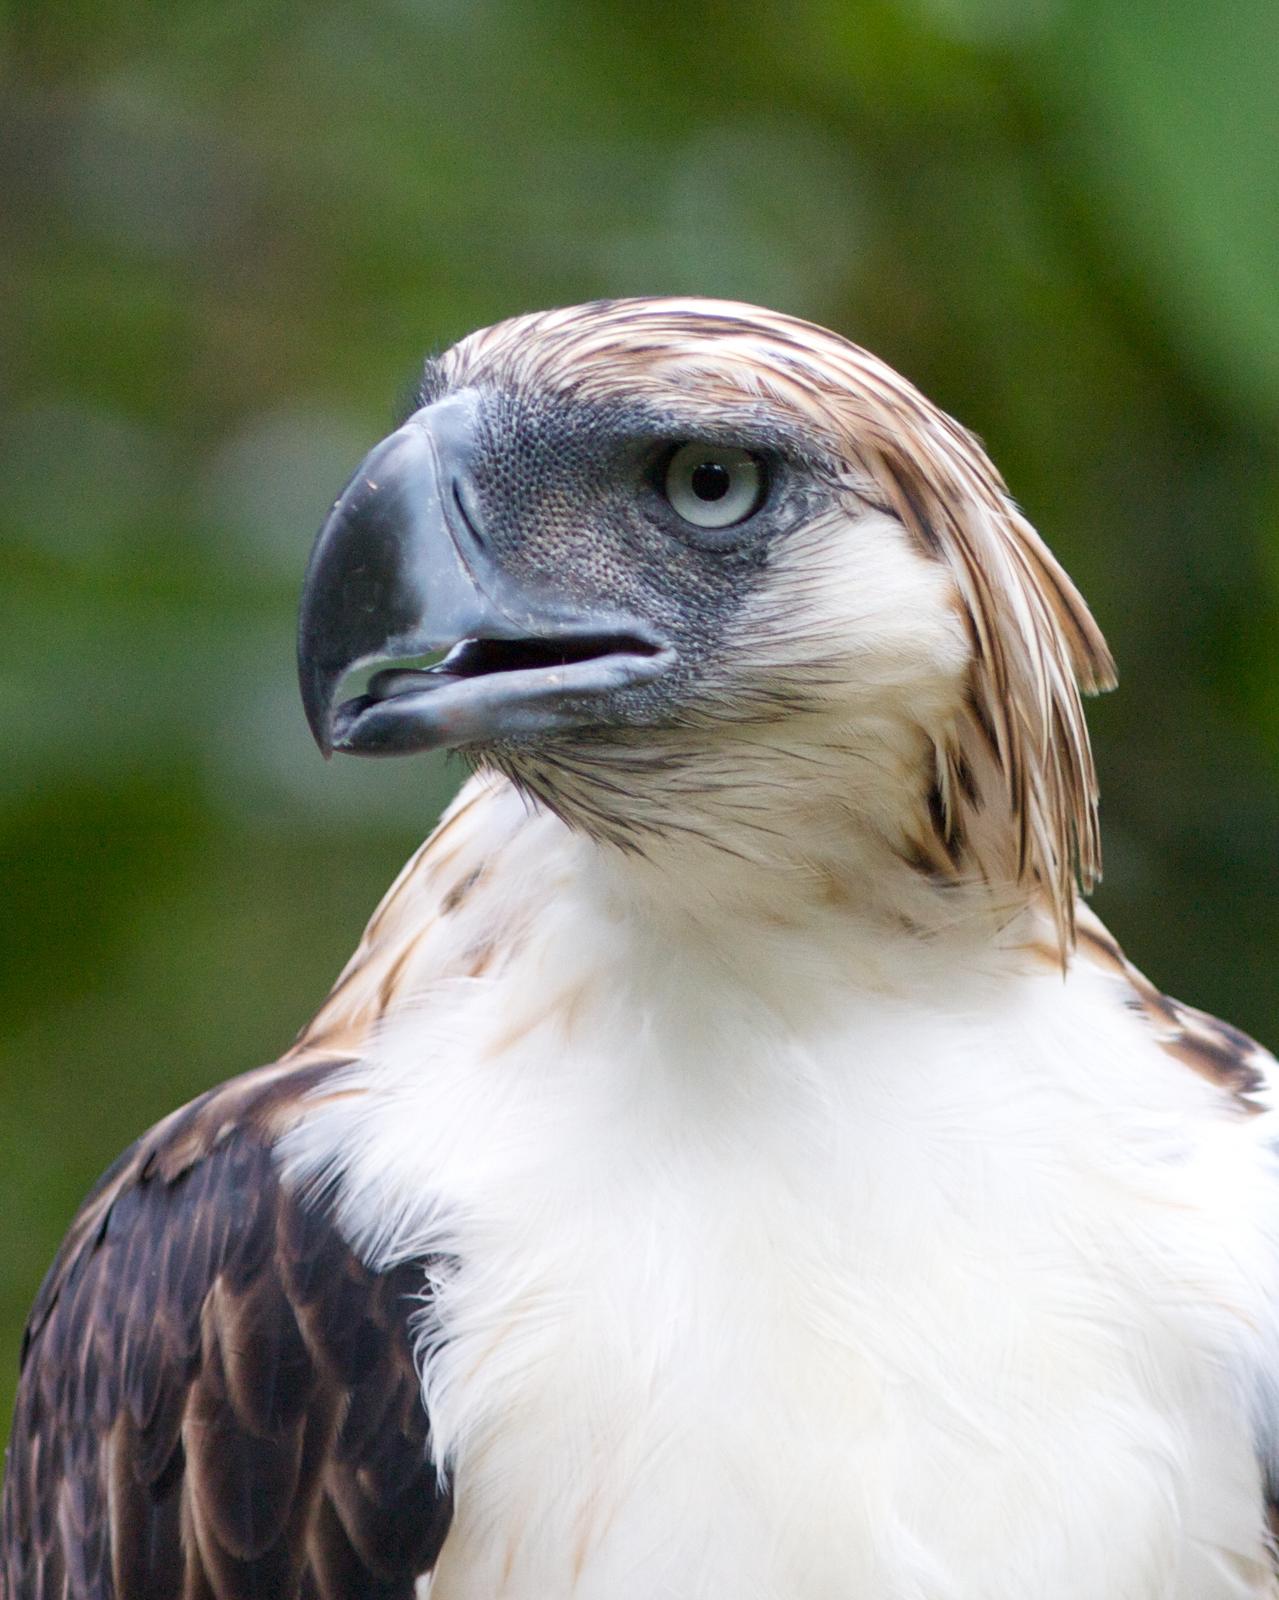 Philippine Eagle Photo by Matthew Brady